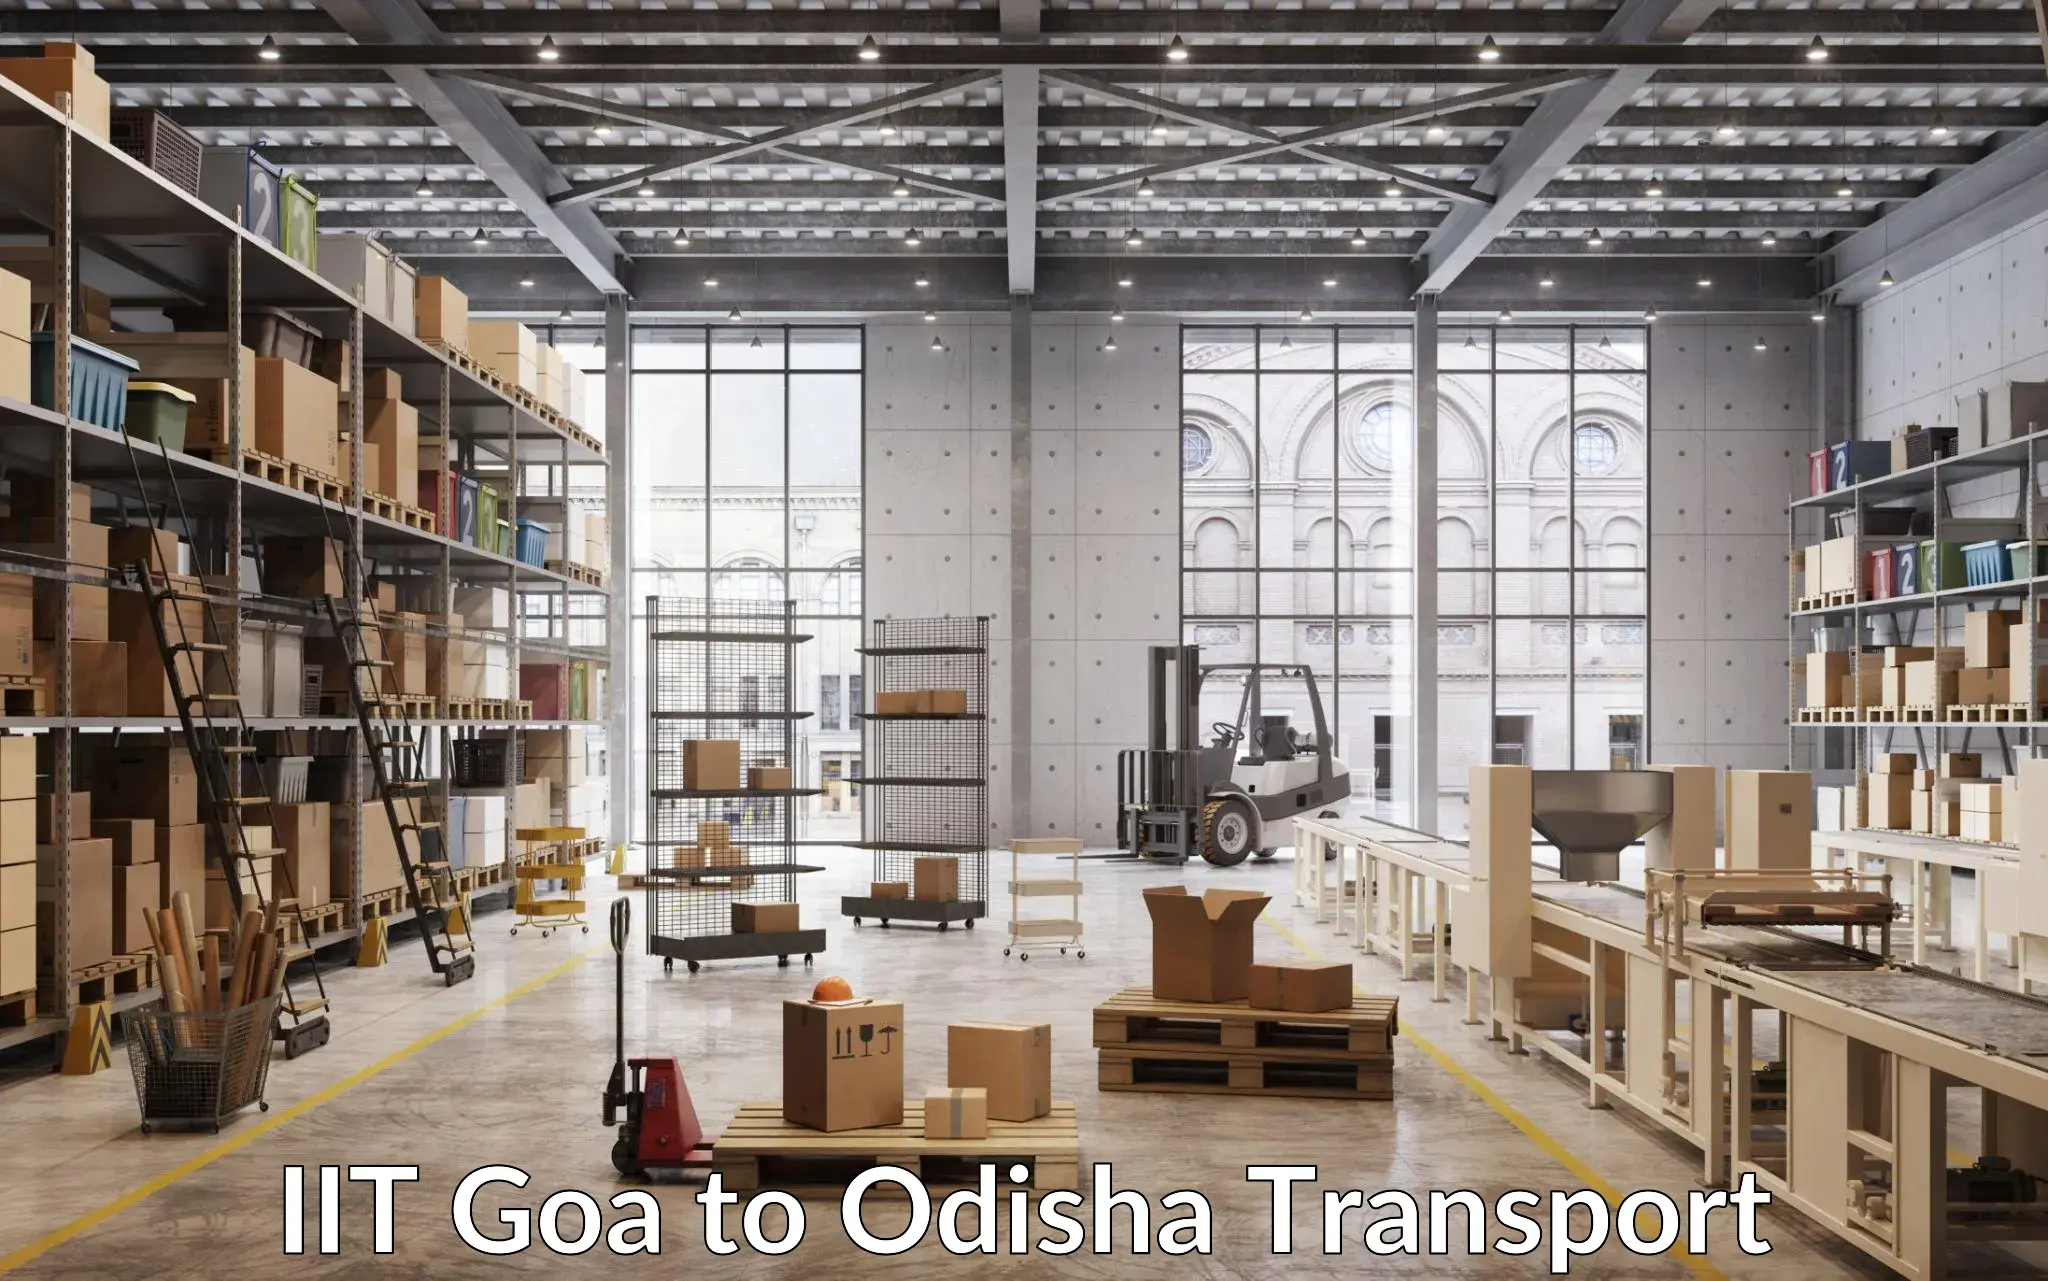 Transport in sharing IIT Goa to Dhamanagar